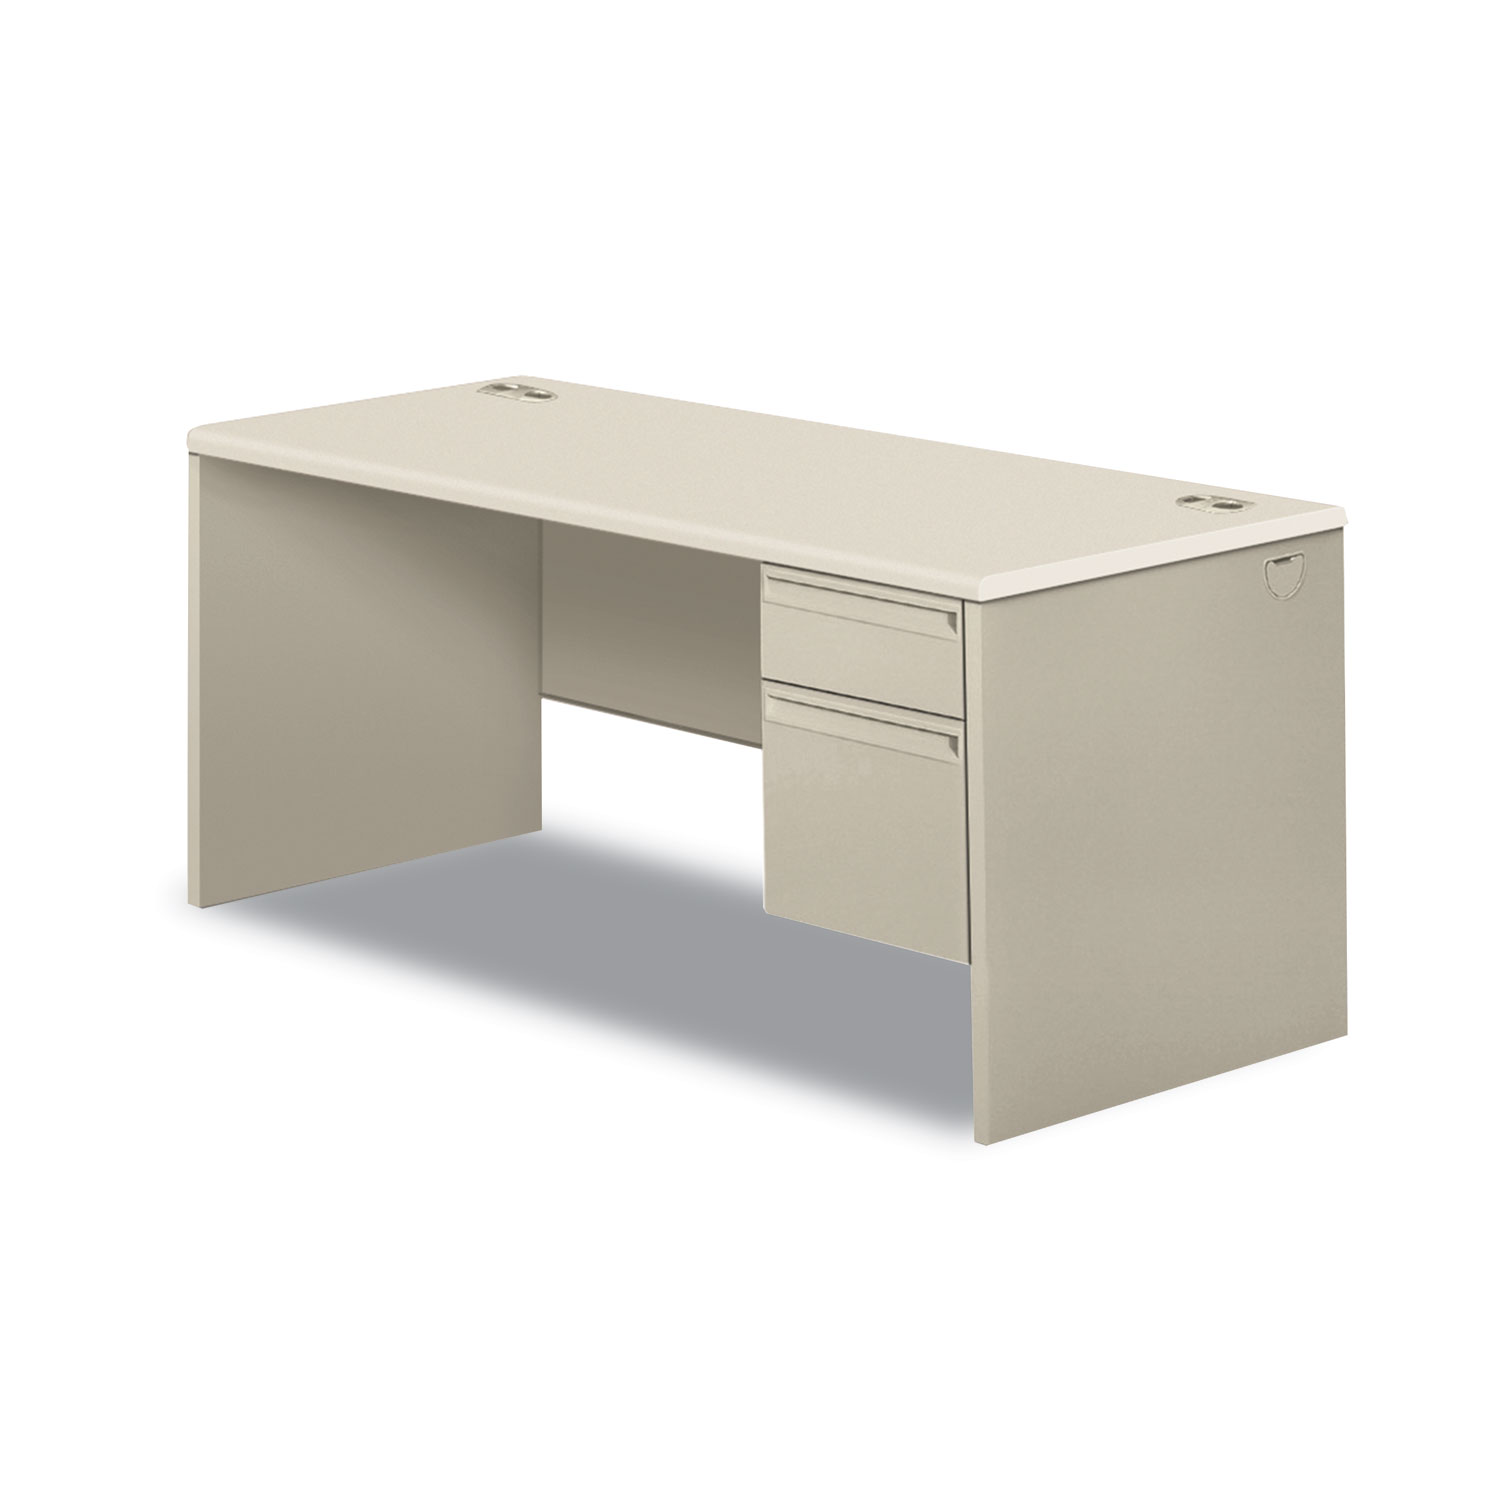  HON H38291R.B9.Q 38000 Series Single Pedestal Desk, Right, 66w x 30d x 30h, Silver Mesh/Light Gray (HON38291RB9Q) 